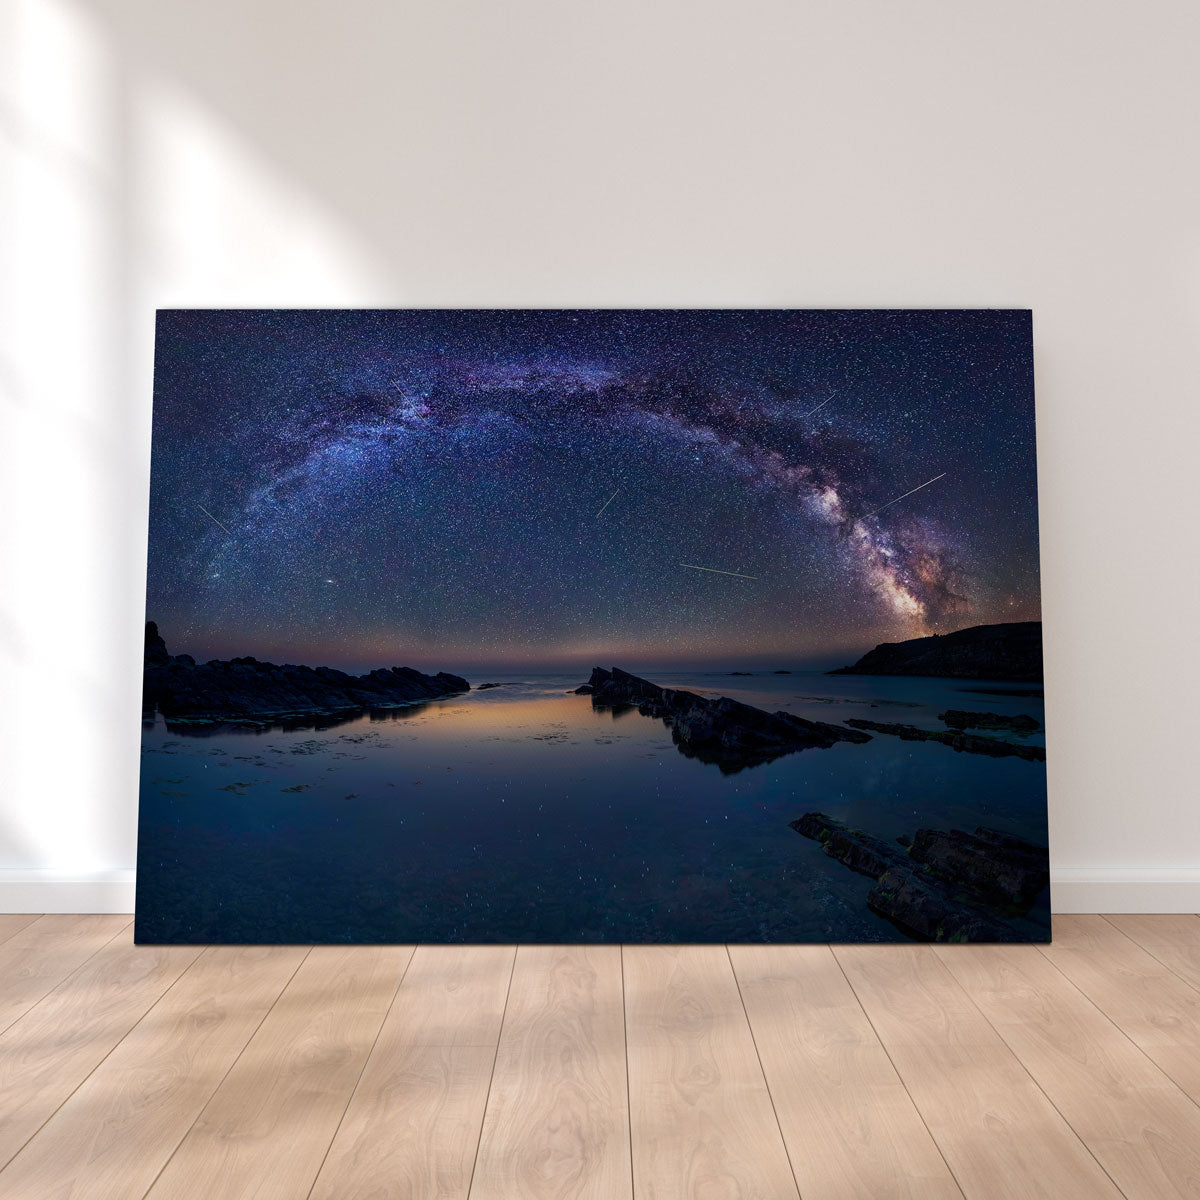 Arched Galaxy Canvas Set